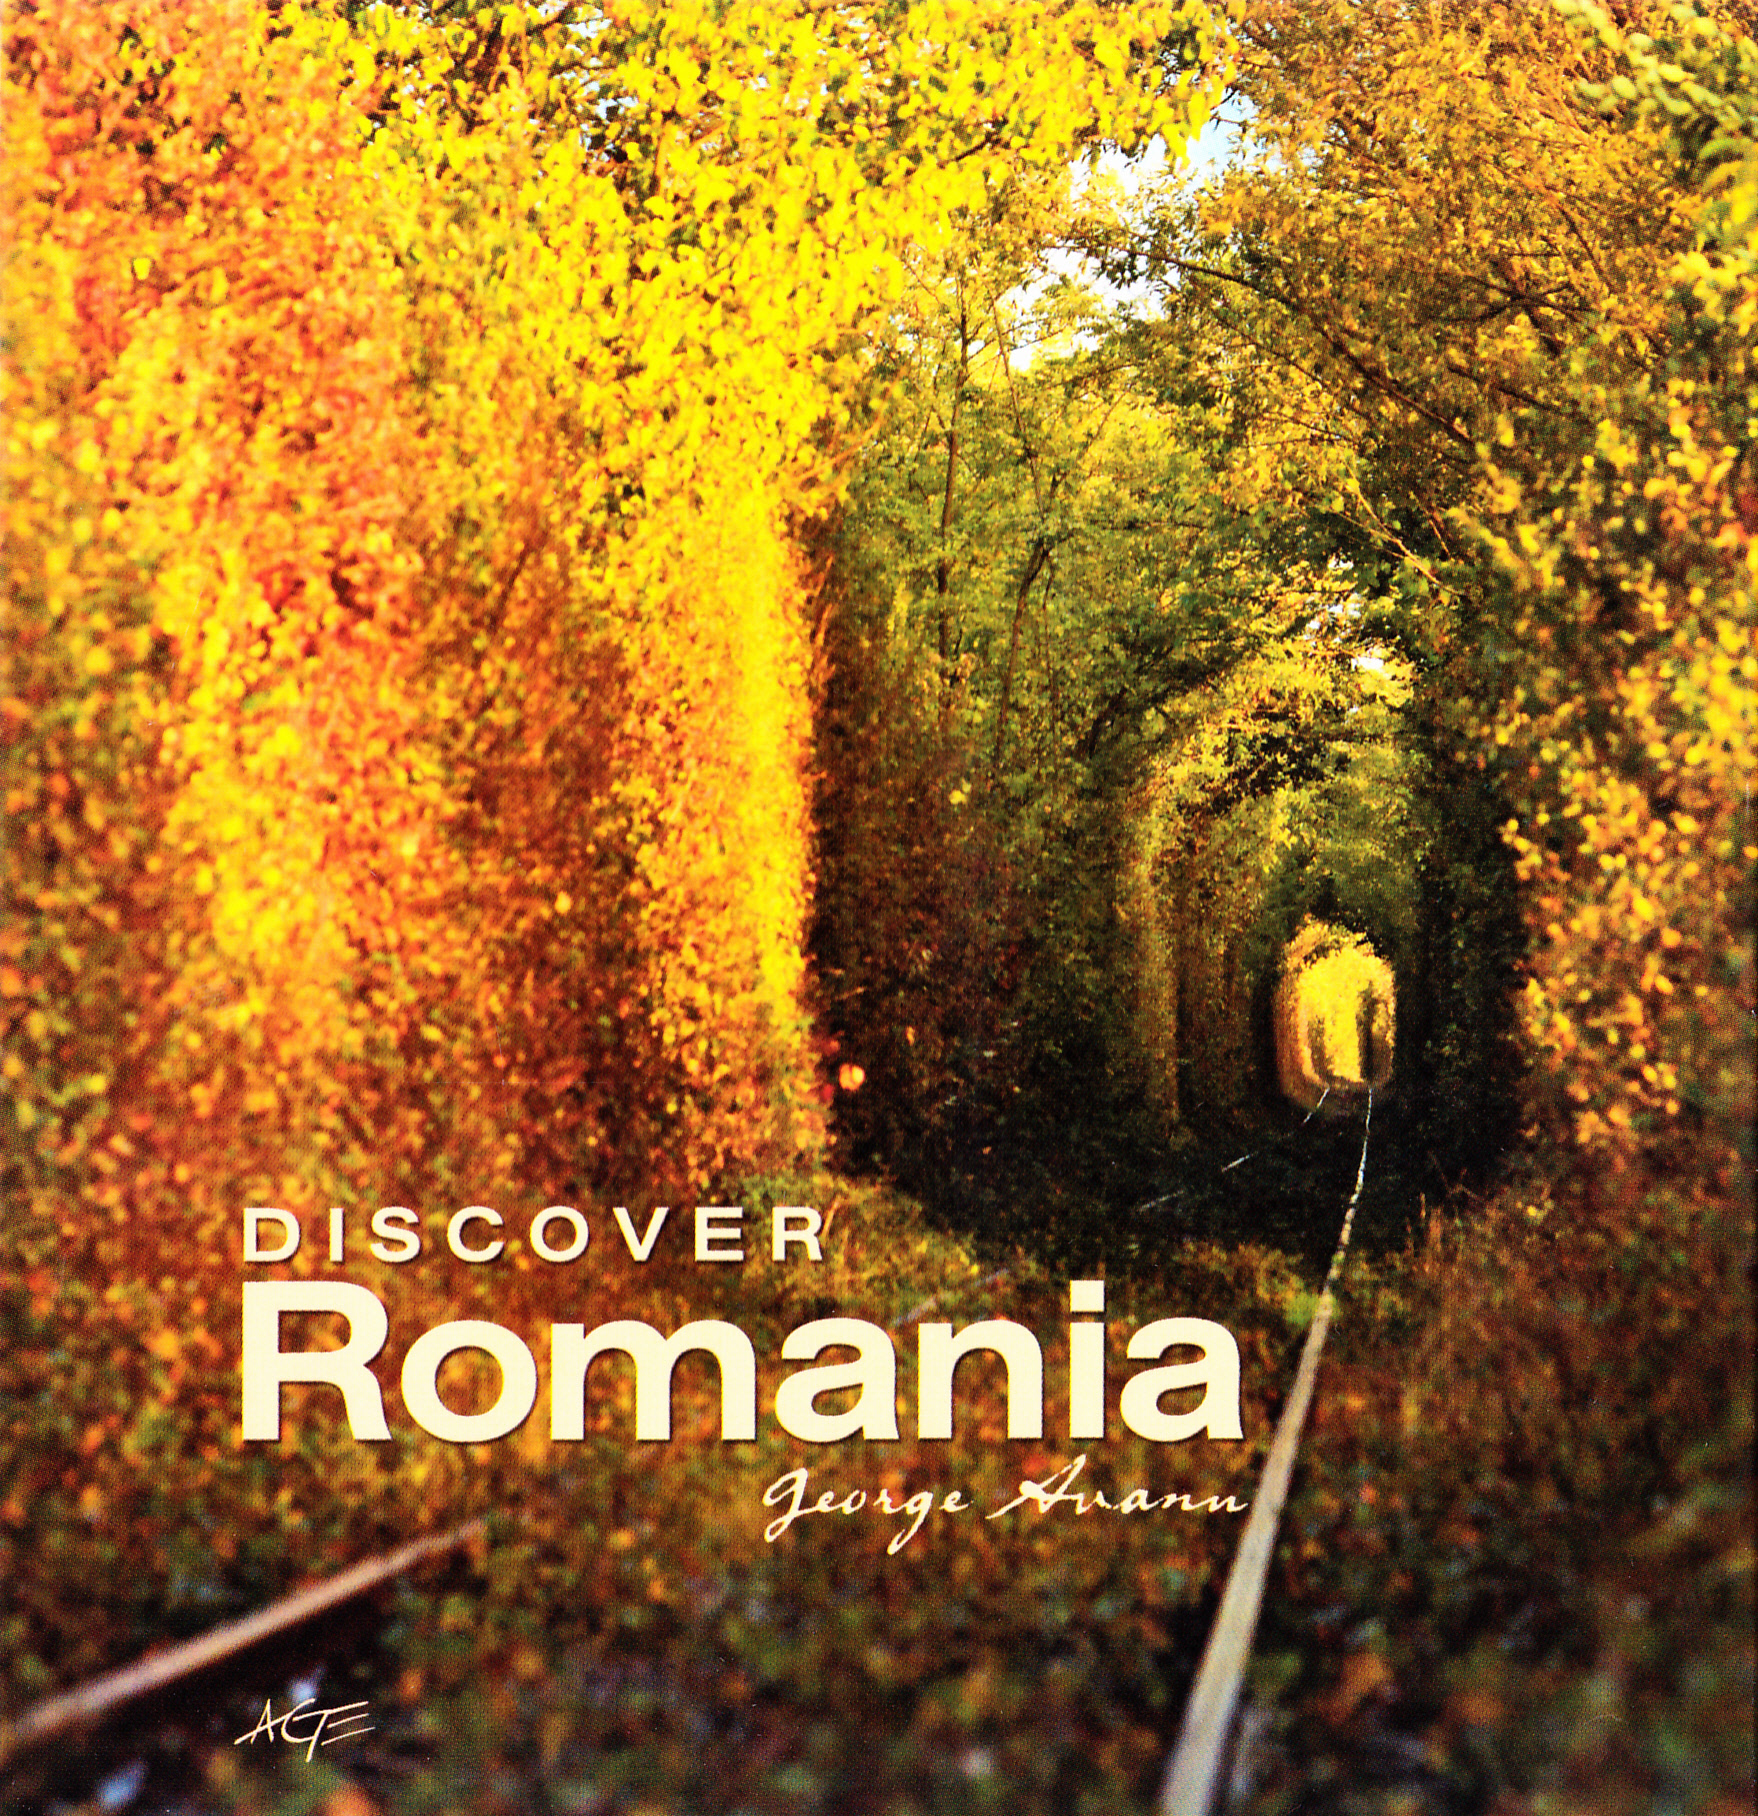 Discover Romania - George Avanu